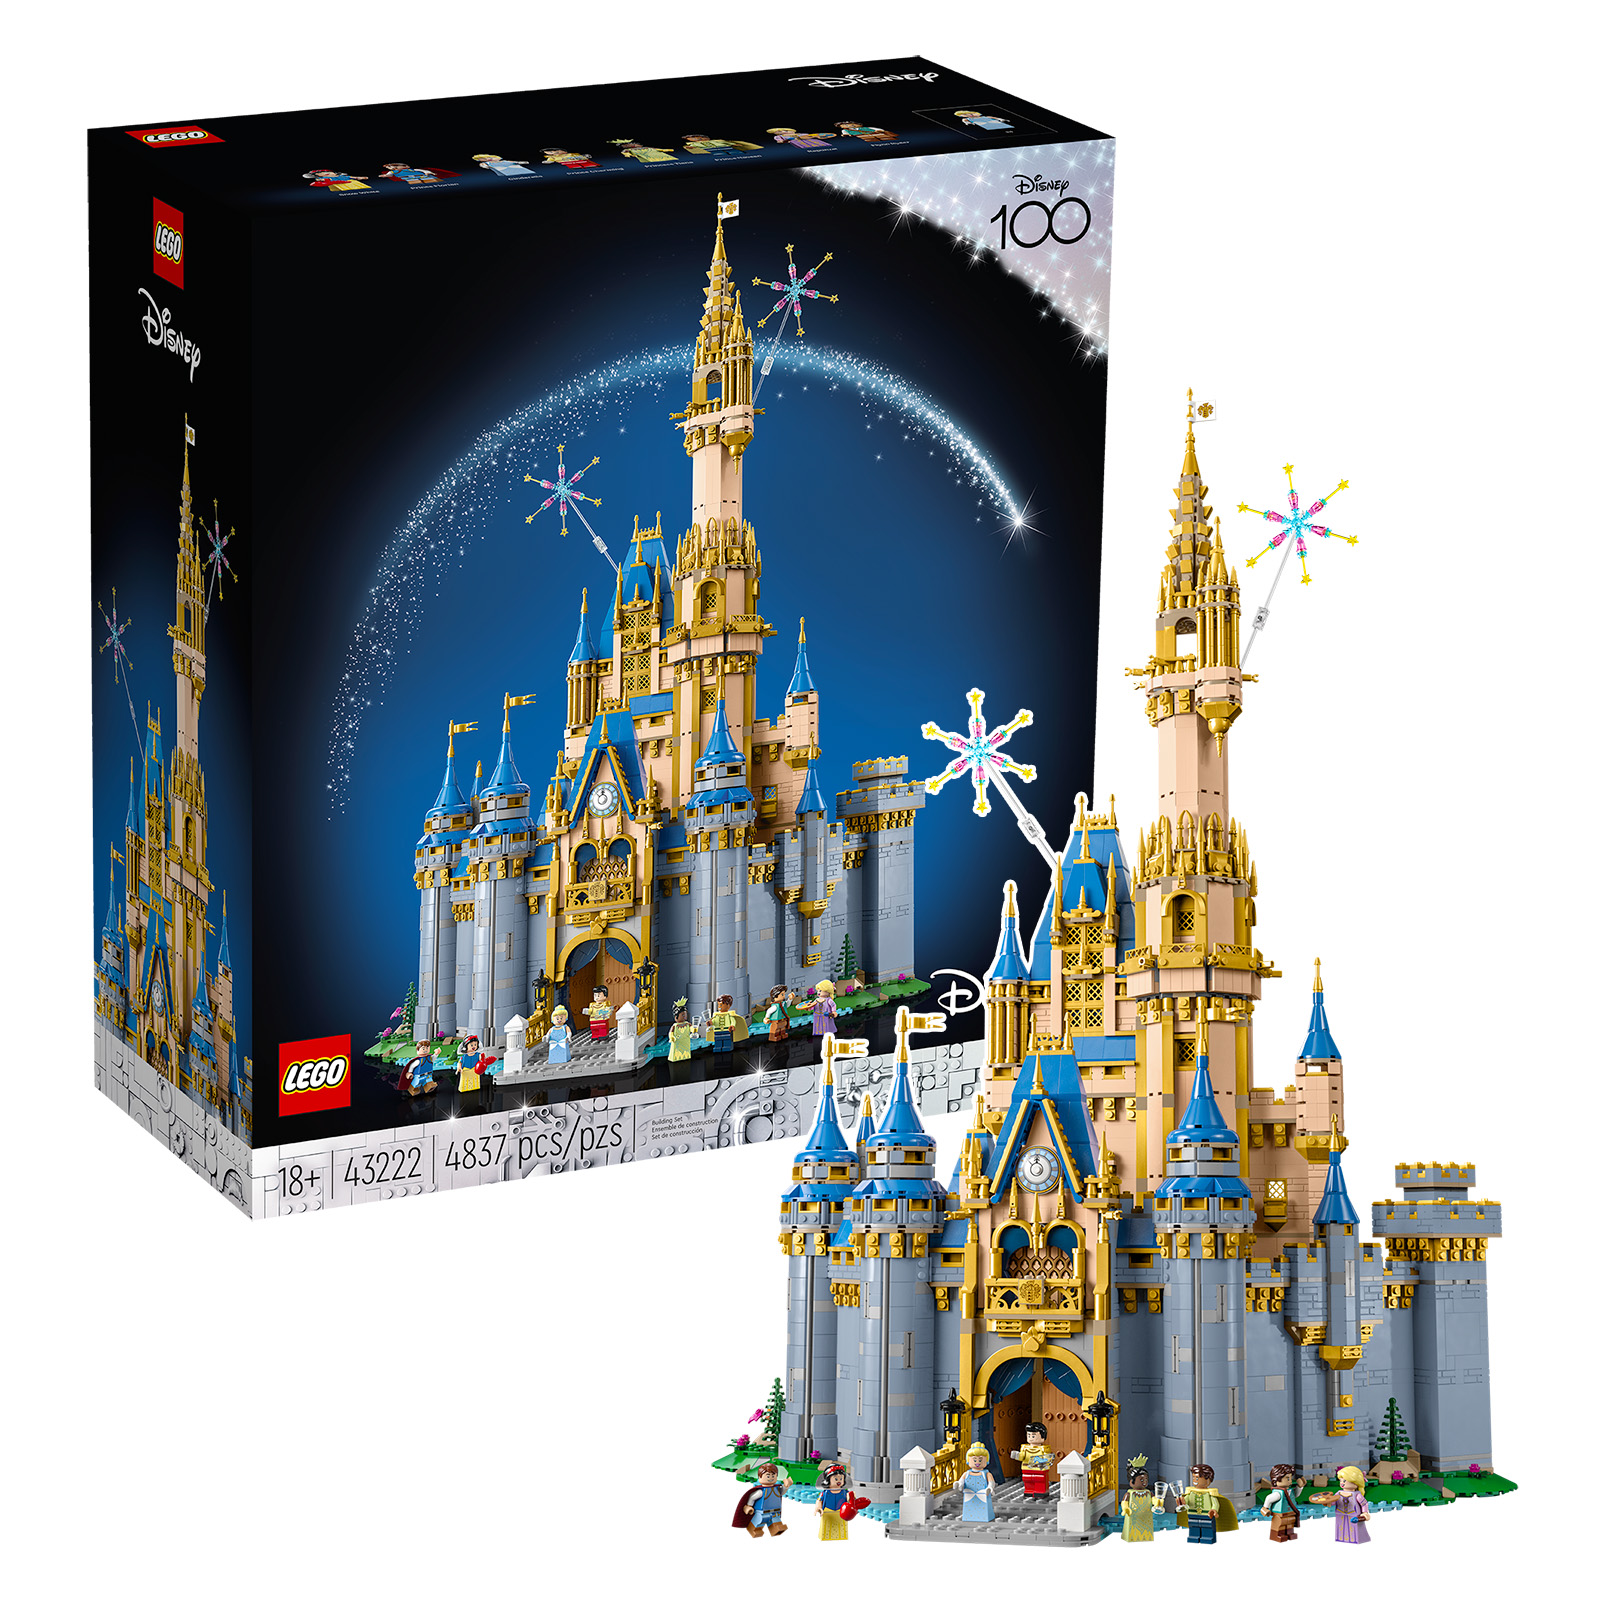 ▻ LEGO Disney 100th Celebration 43222 Disney Castle: the set is online on  the Shop - HOTH BRICKS